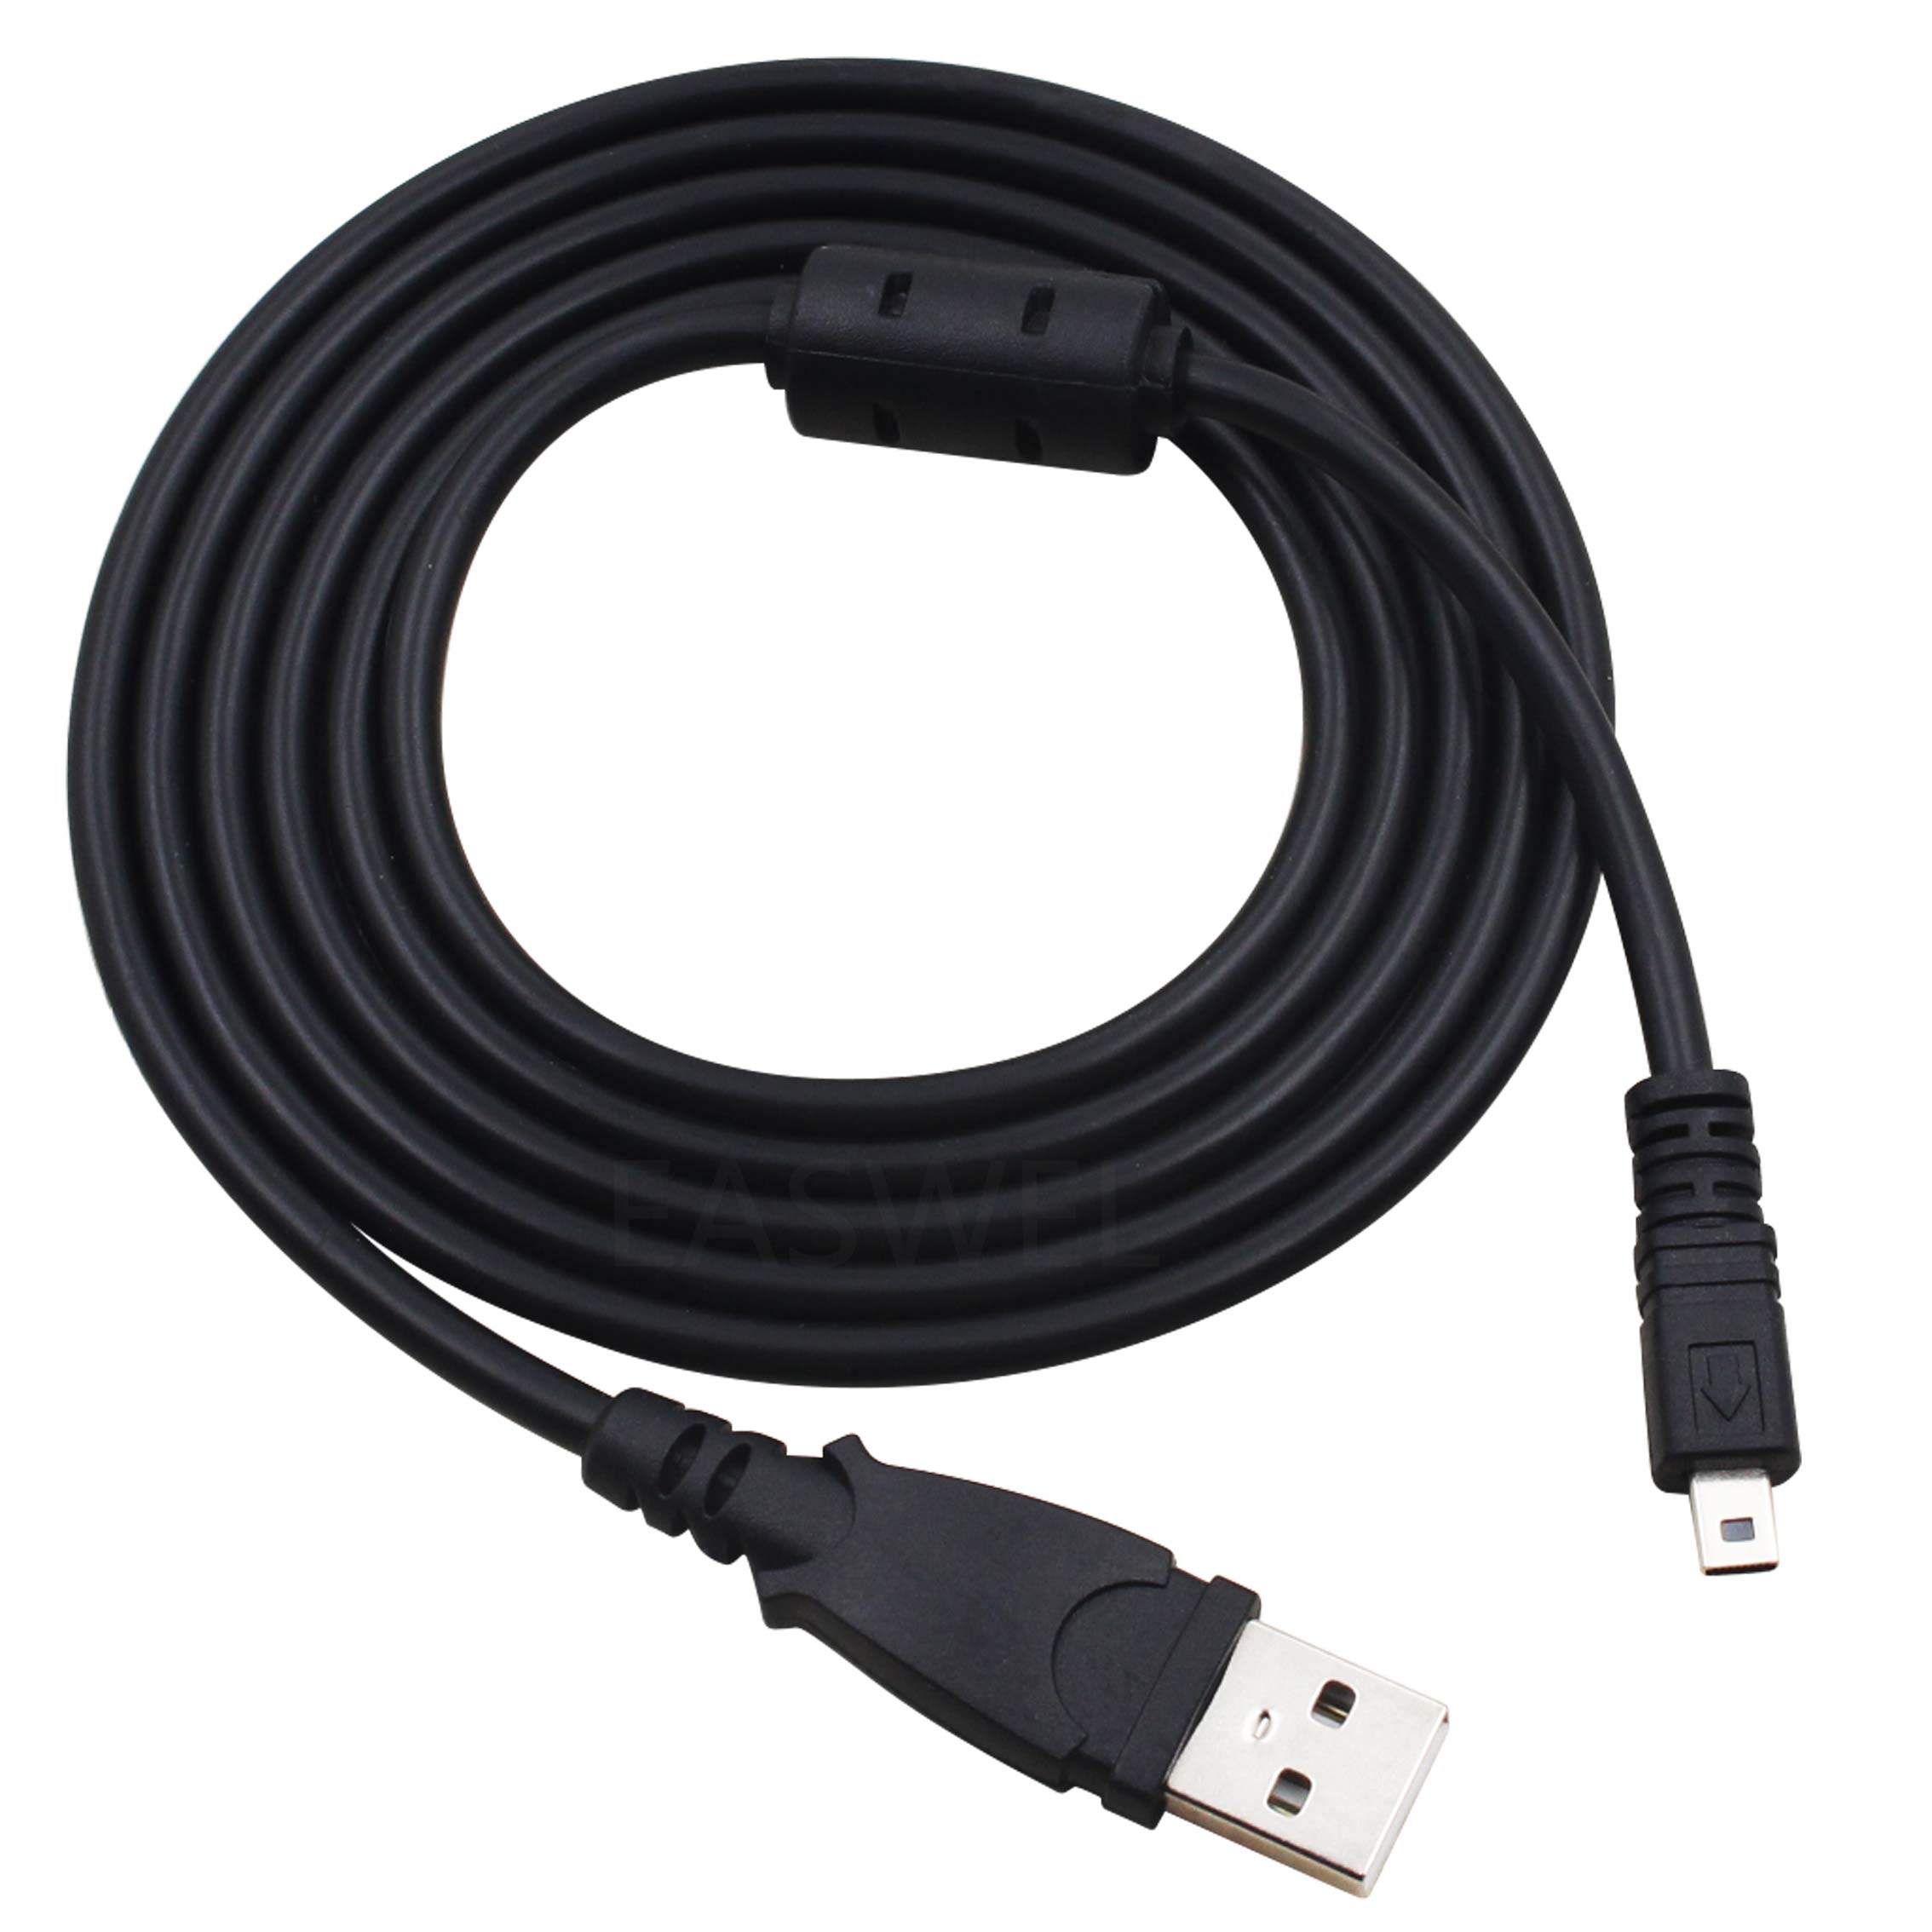 USB Charger Data SYNC Cable Koord Voor Panasonic Lumix DMC-FZ300 DMC-Fz72 DMC-TZ71